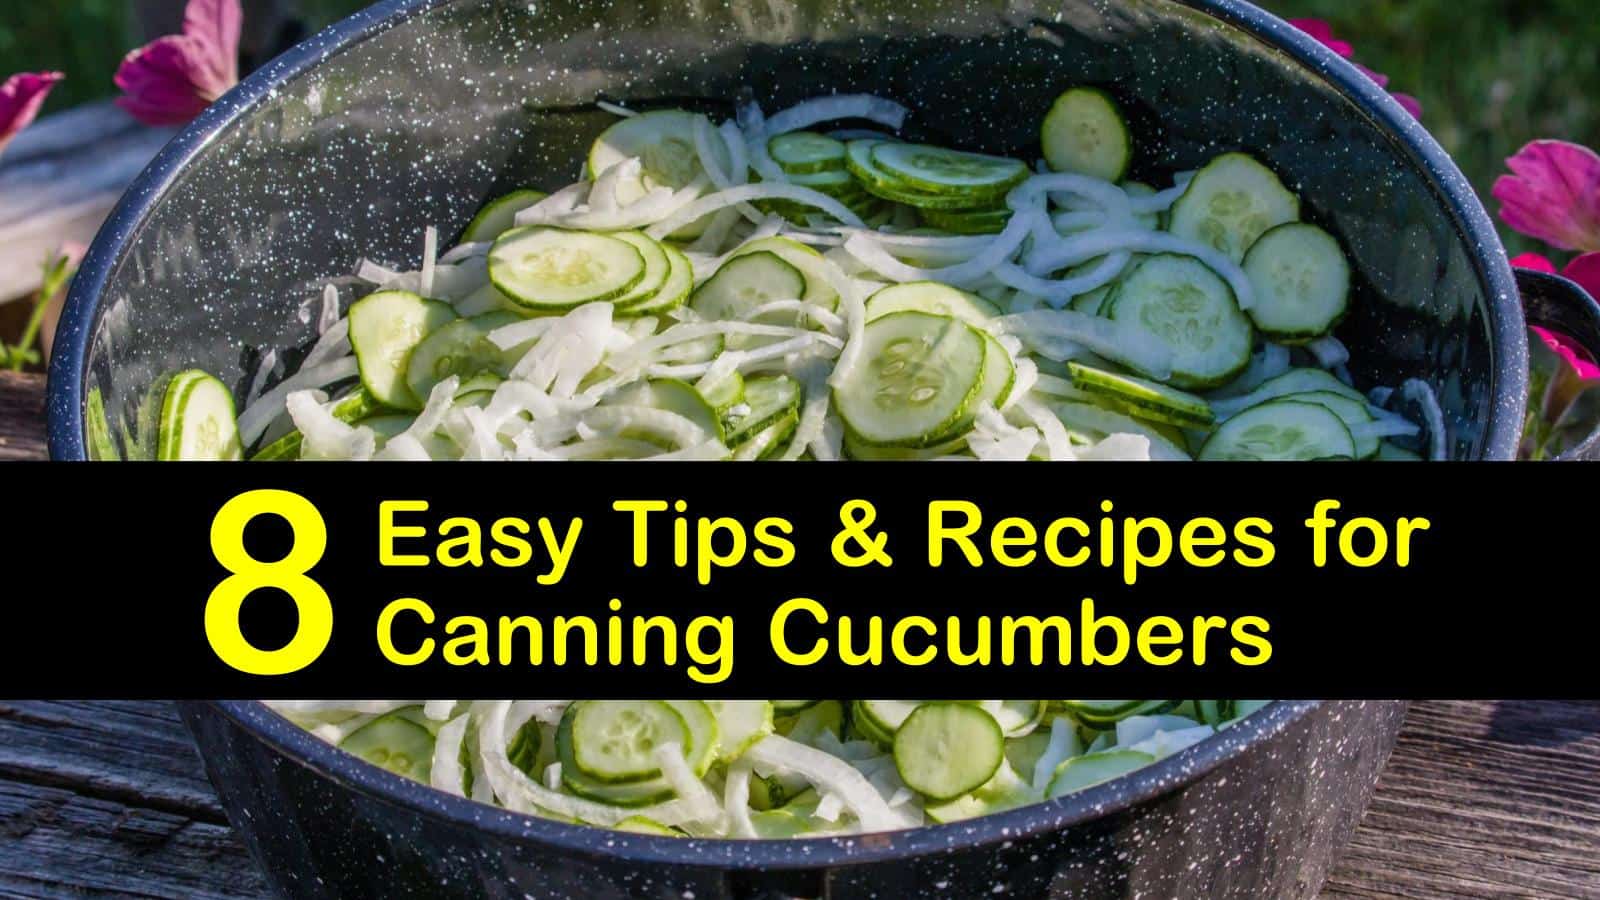 canning cucumbers titleimg1